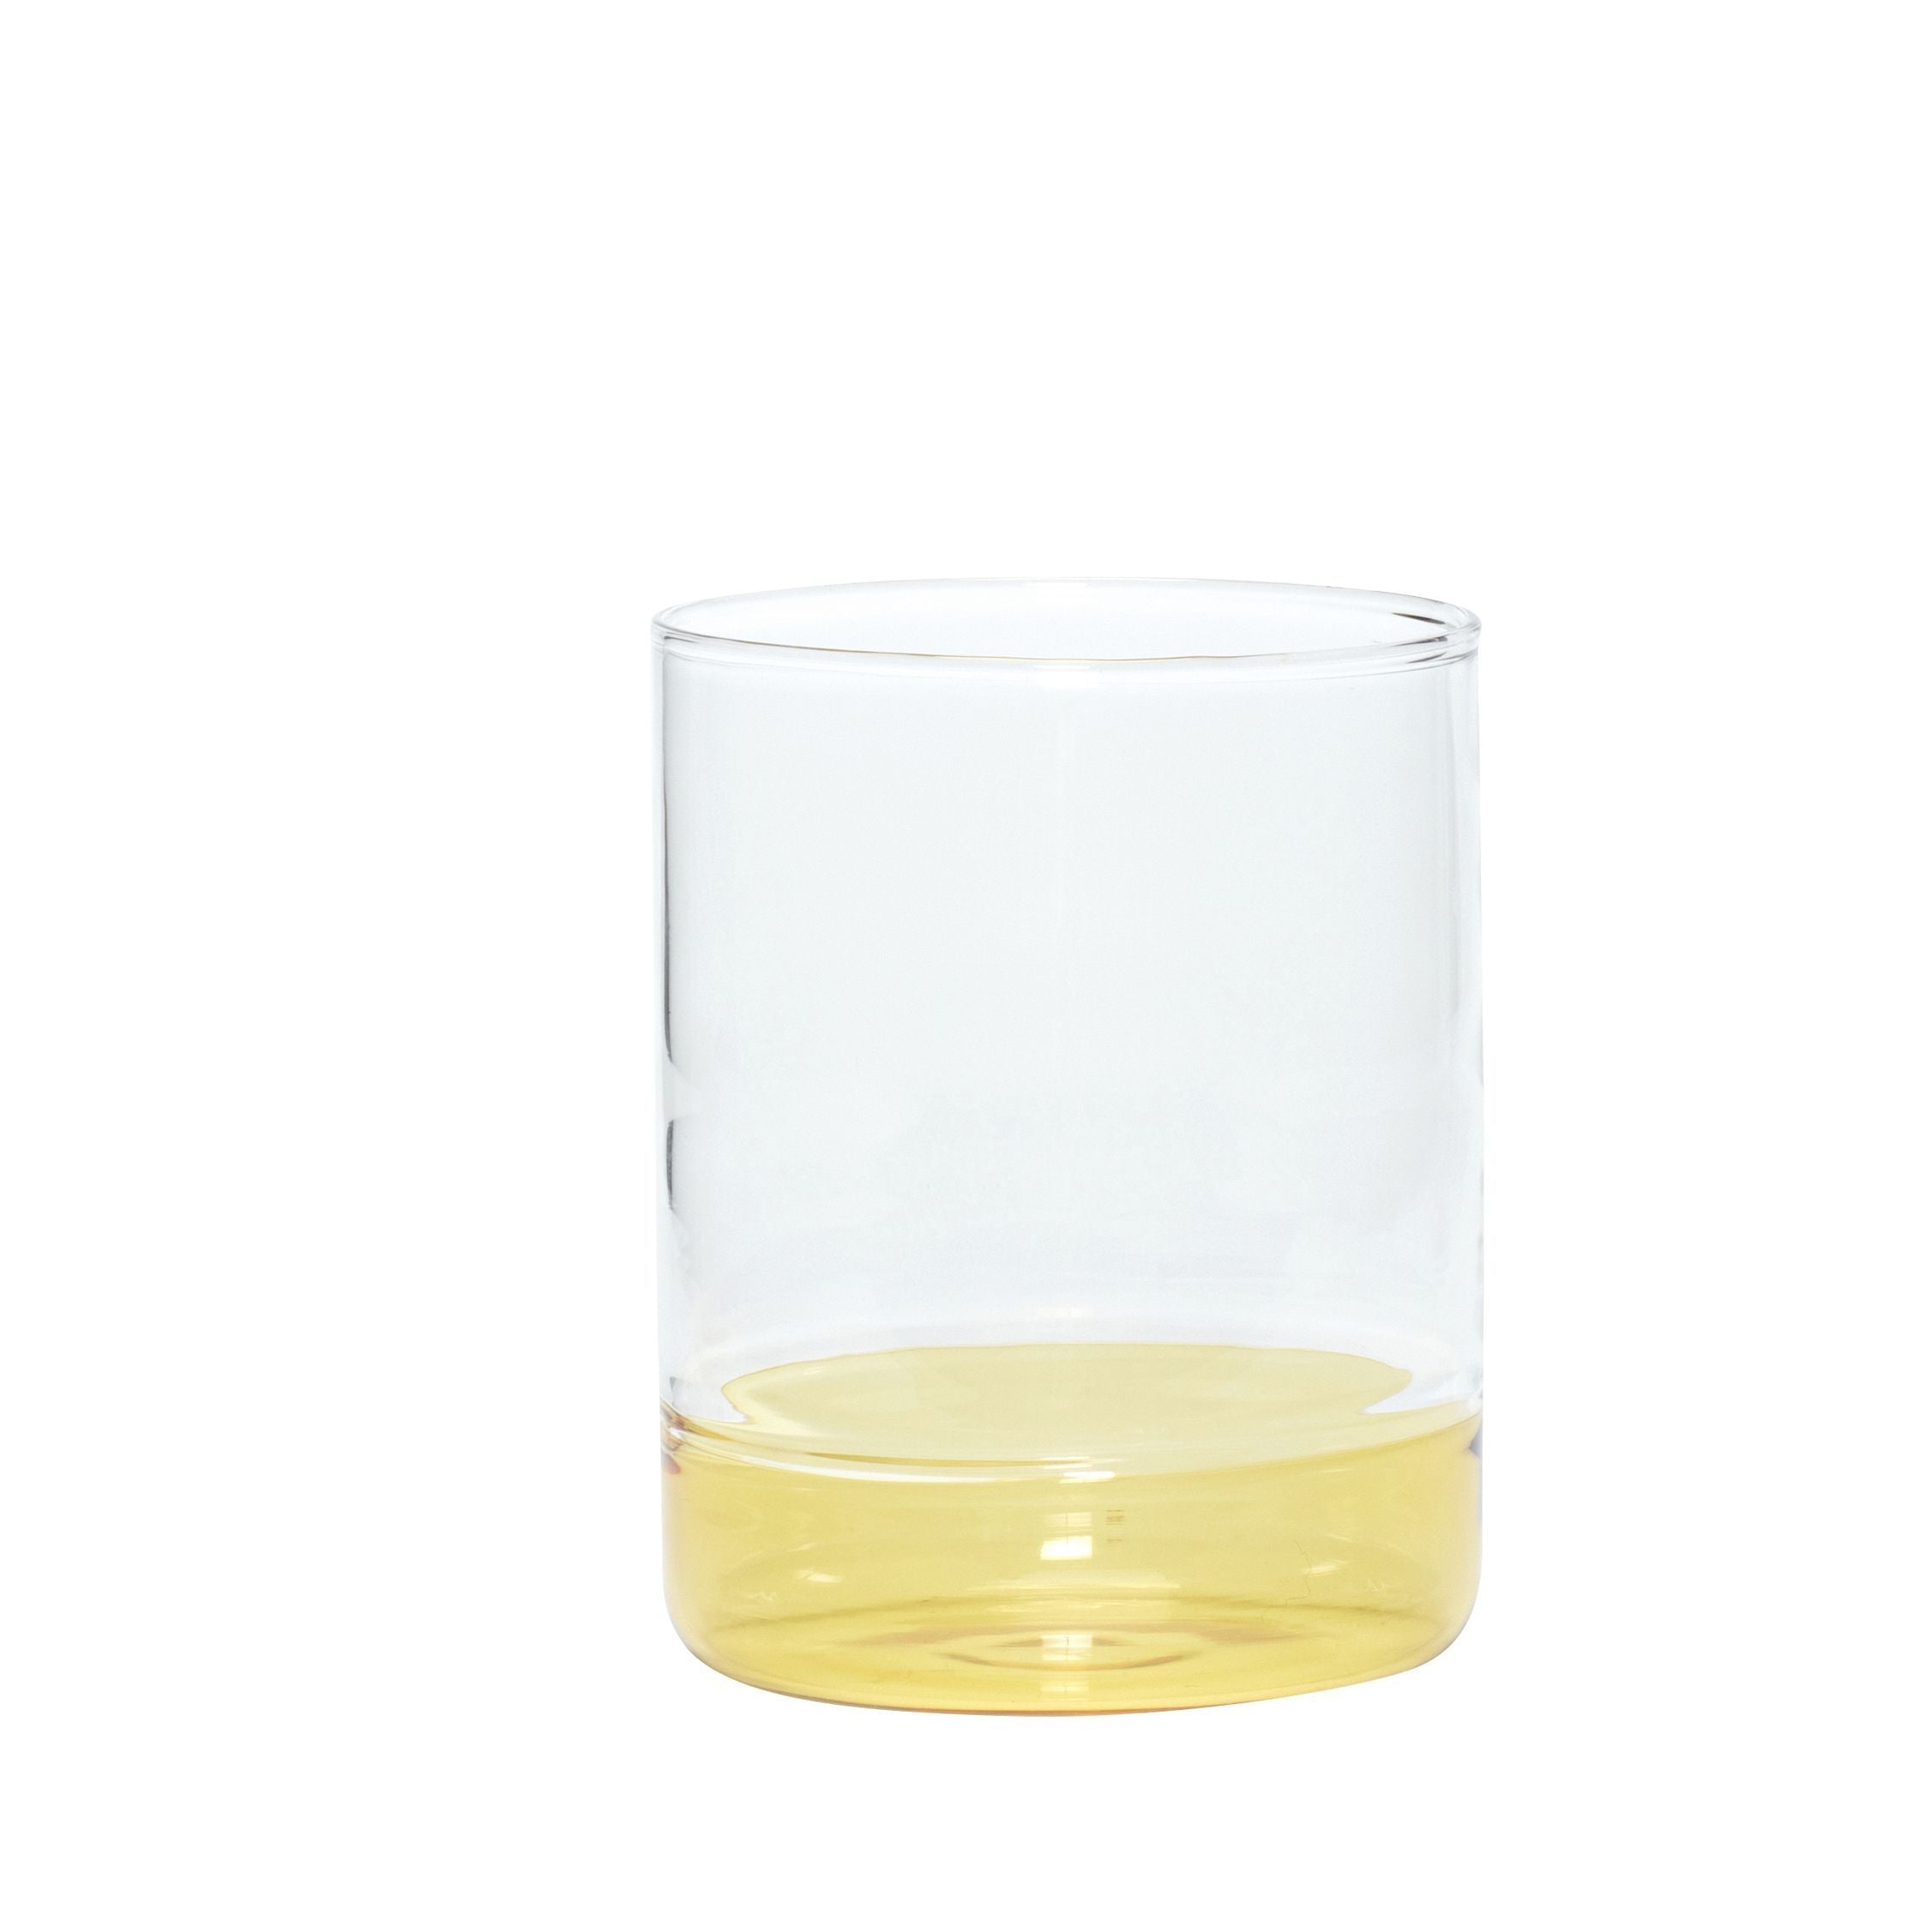 Hübsch Kiosk vatten glas glas redo/gult